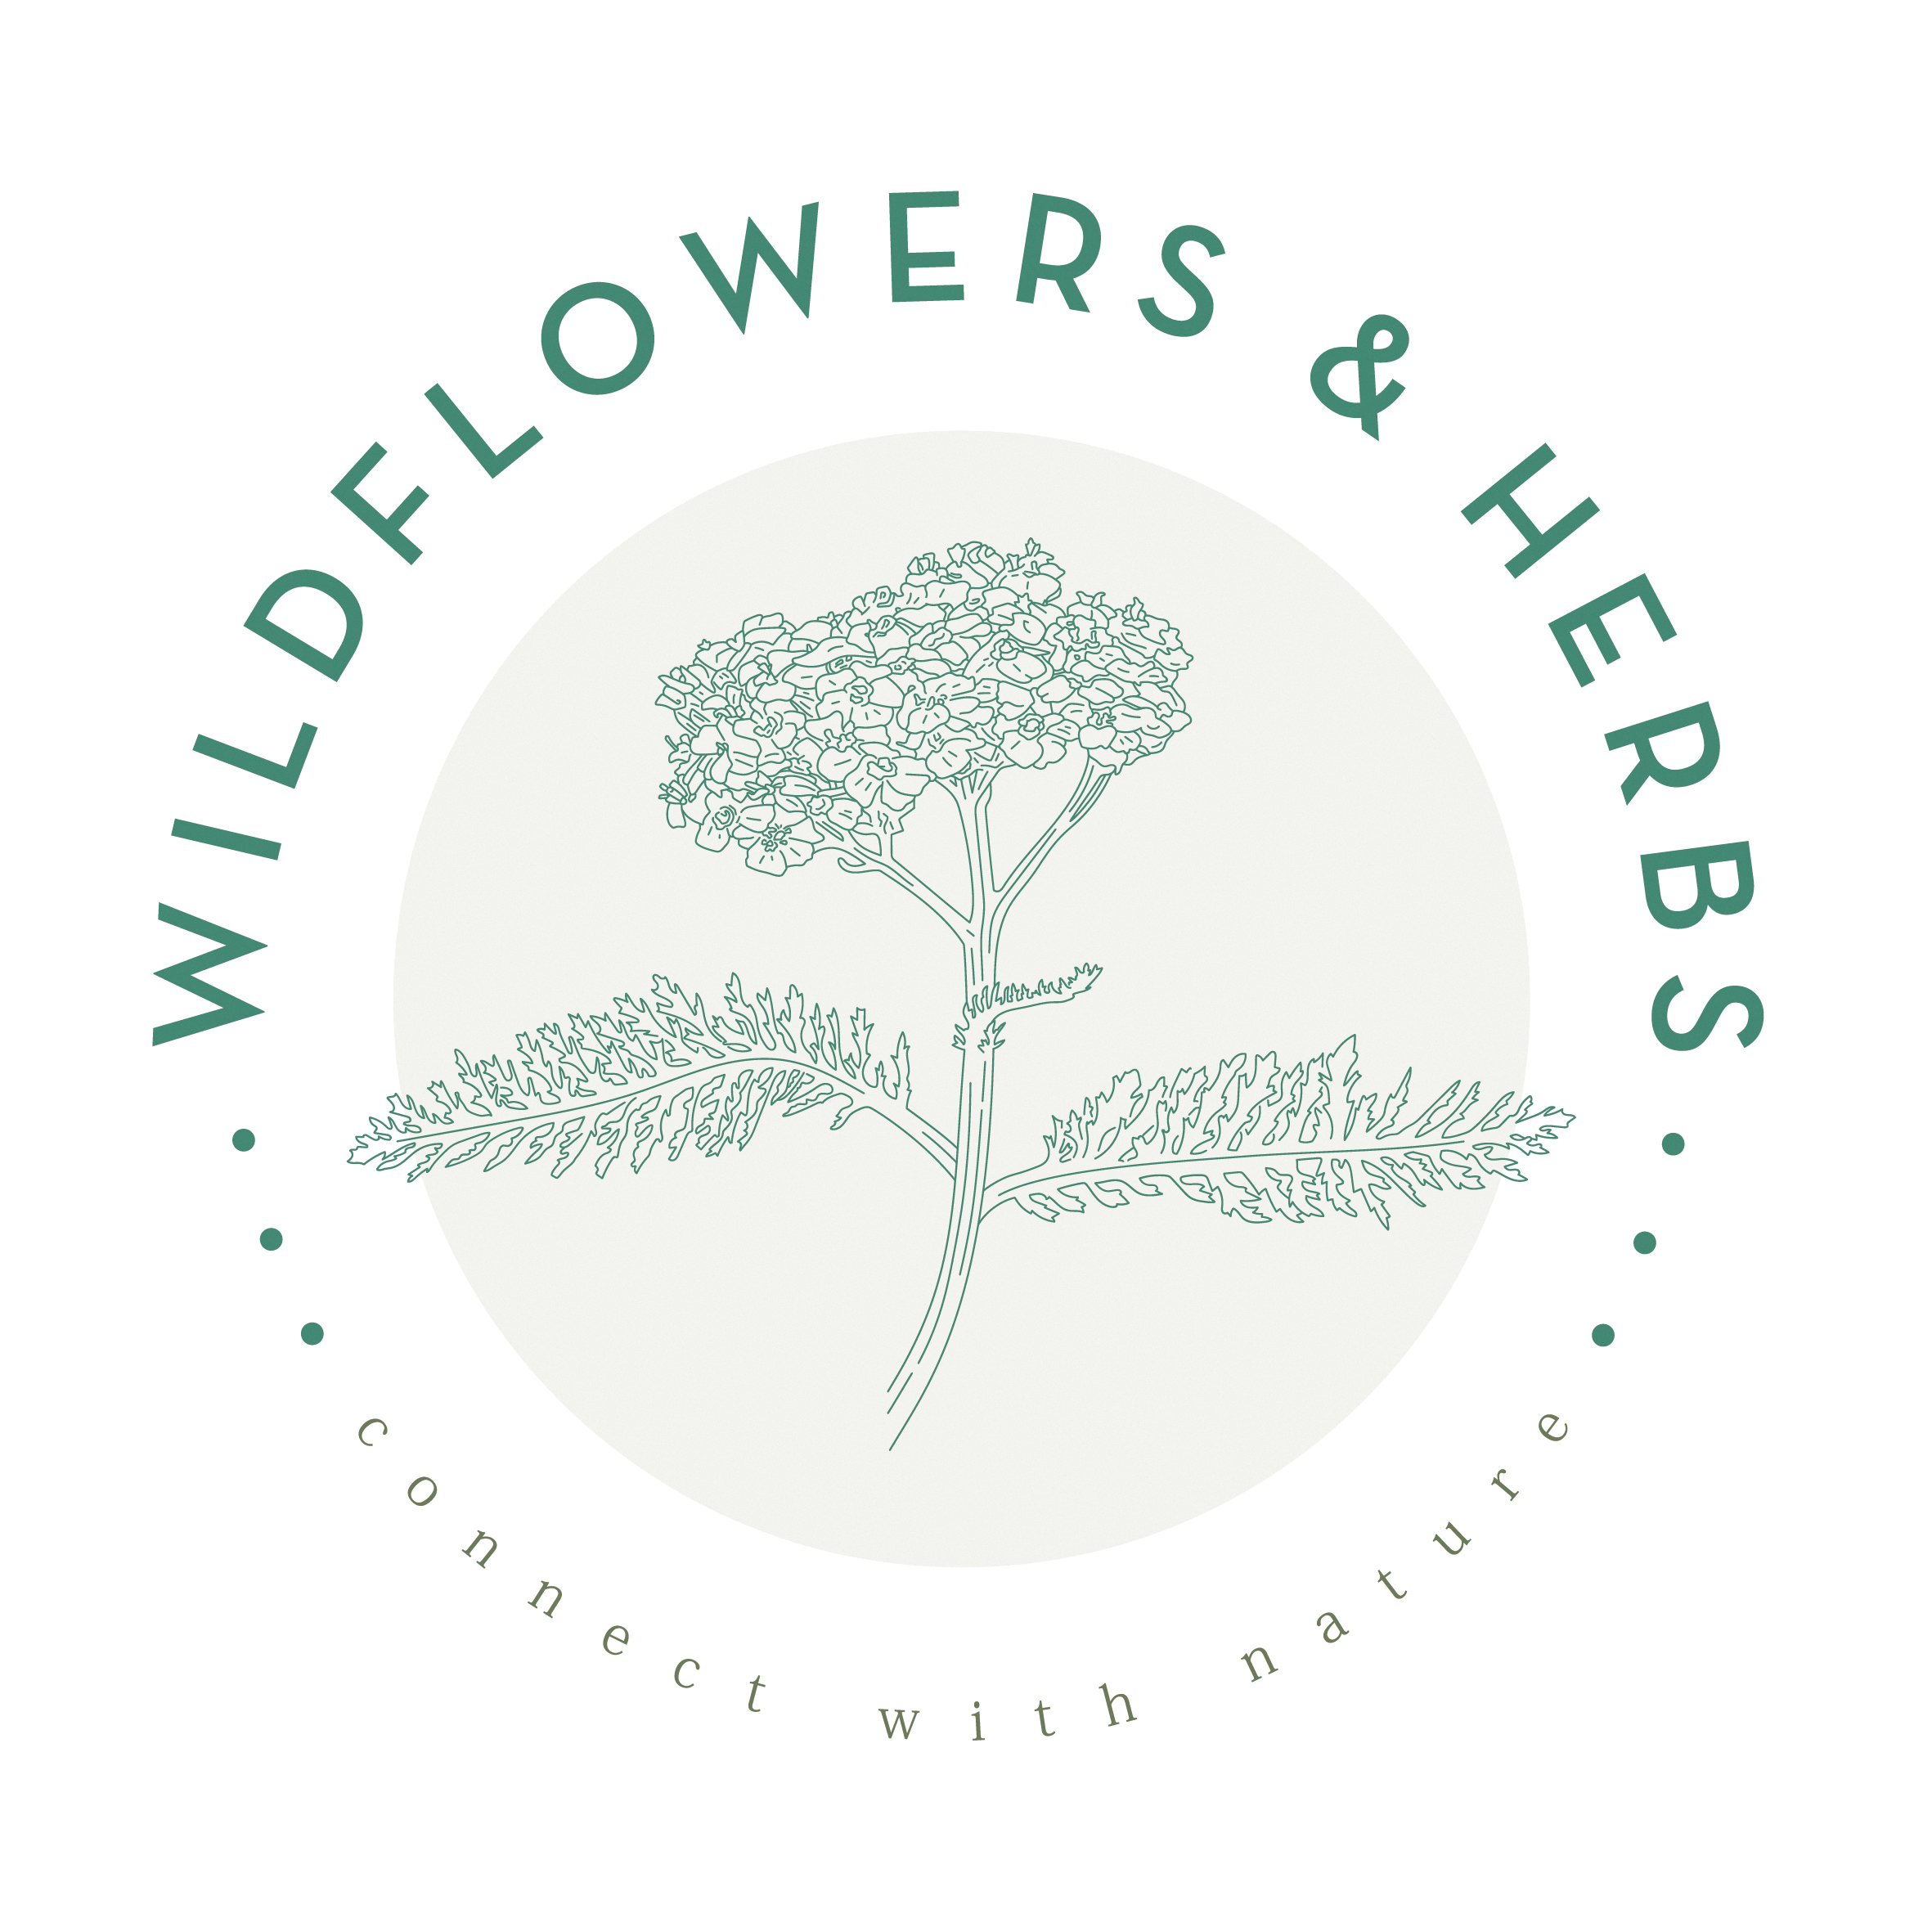 Wildflowers-and-herbs_FinalesLogo_web